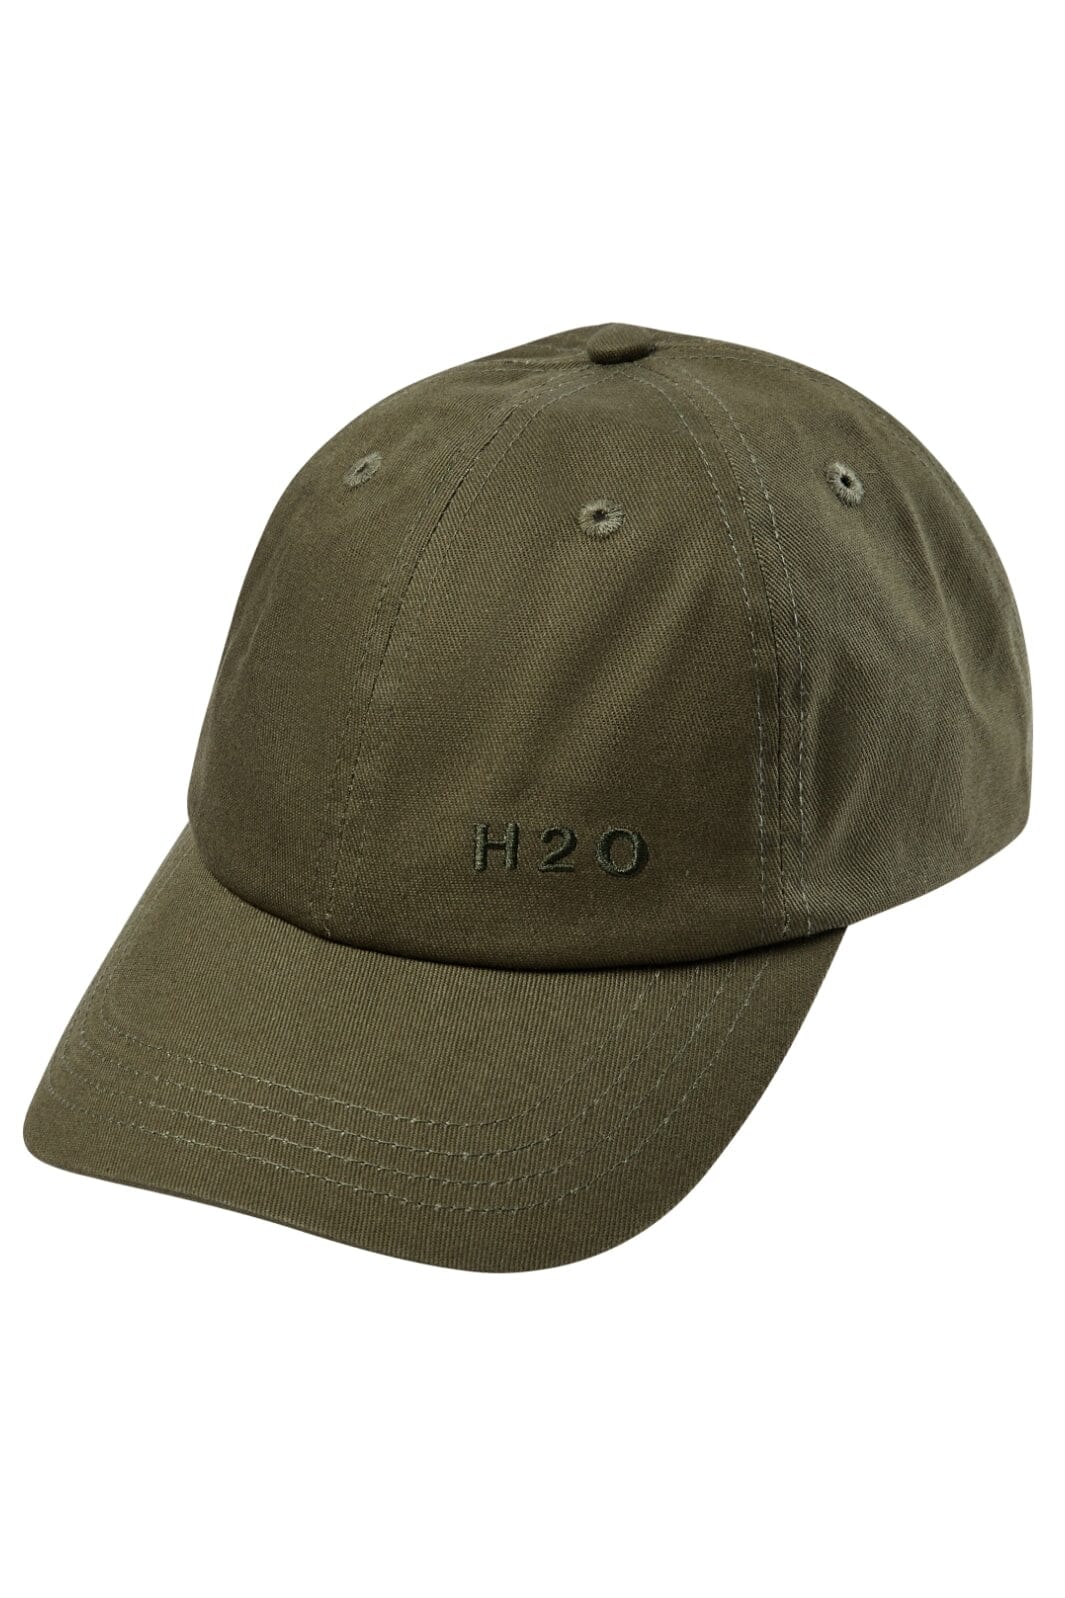 H2O - Happy Cap - 3020 Army Hatte 